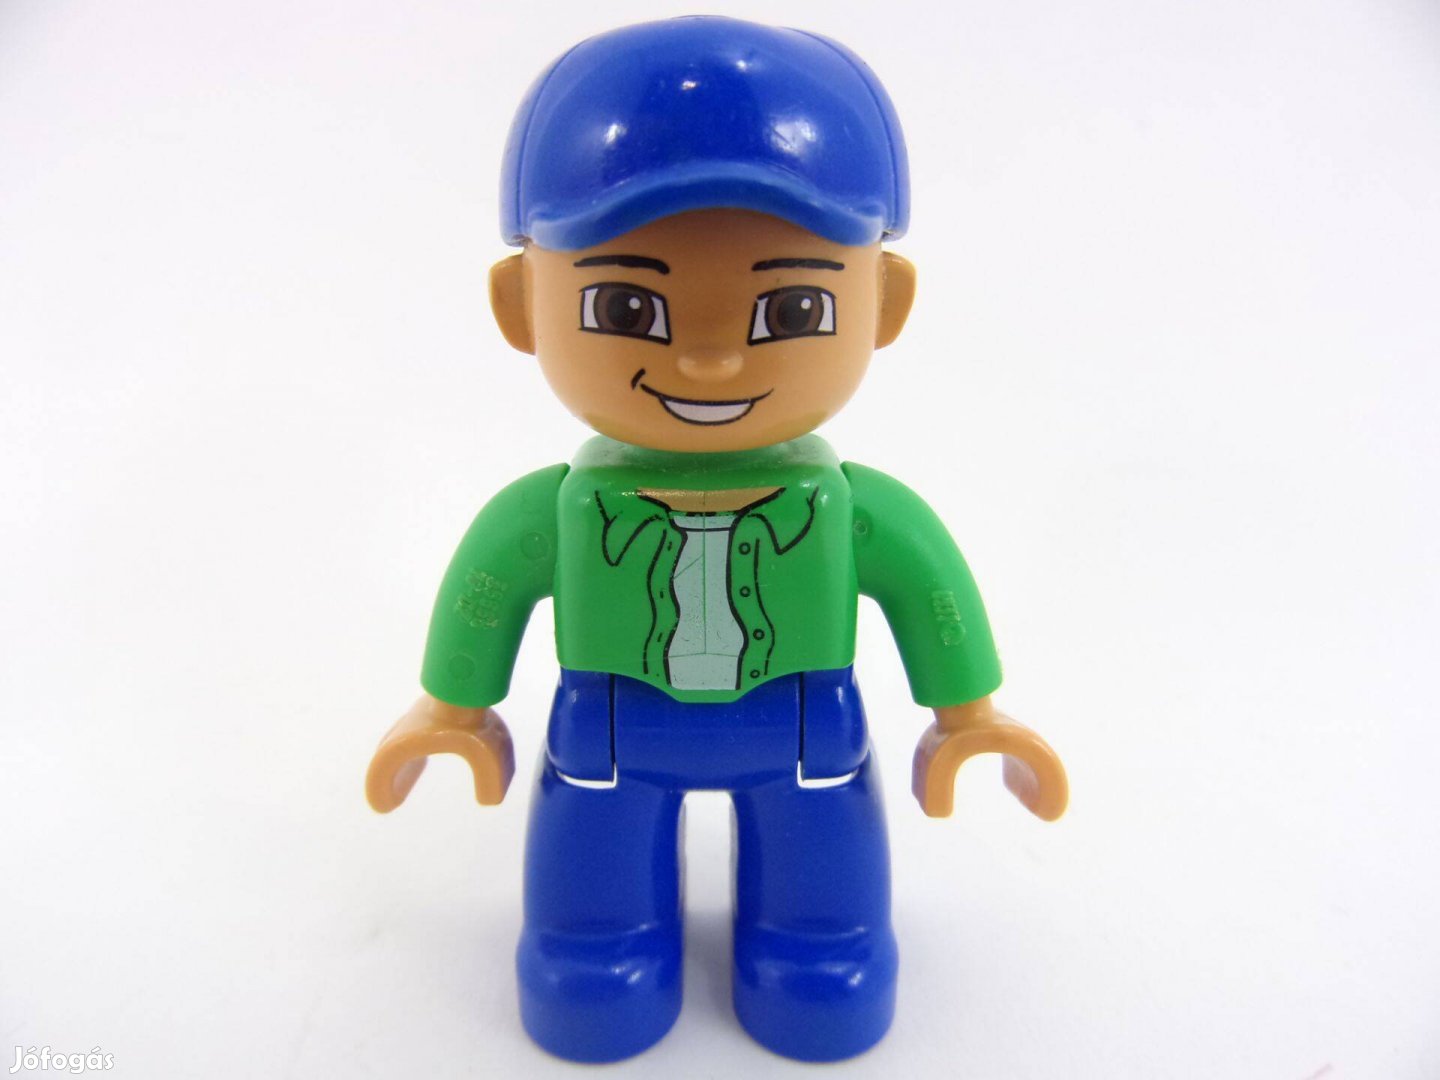 Lego Duplo figura